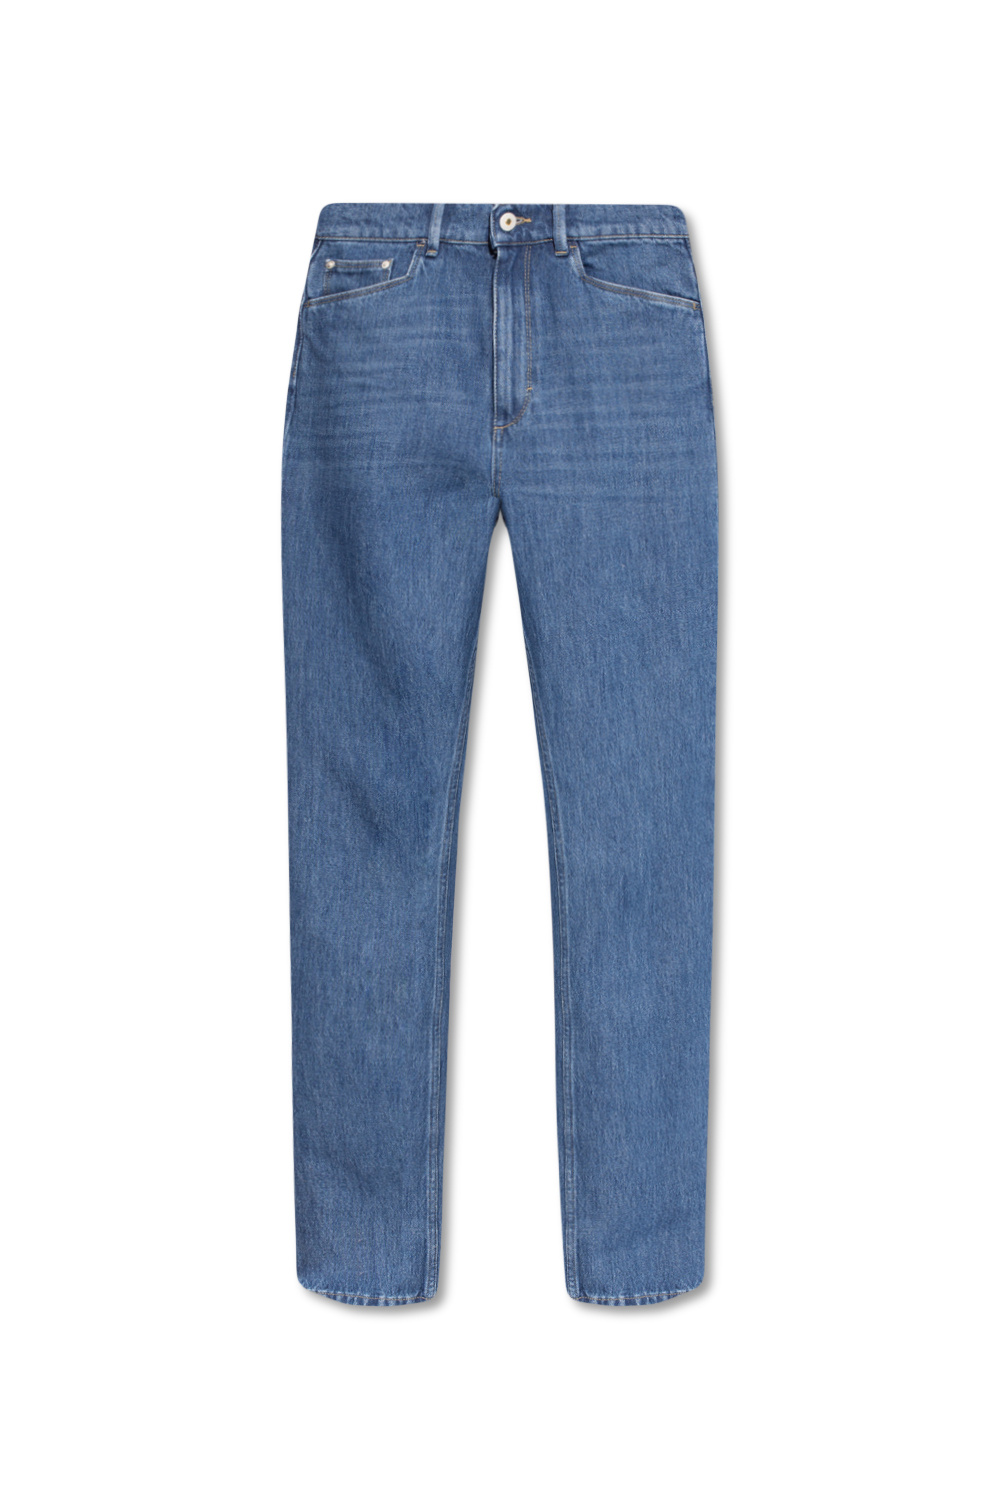 Wandler ‘Carnation Long’ straight jeans